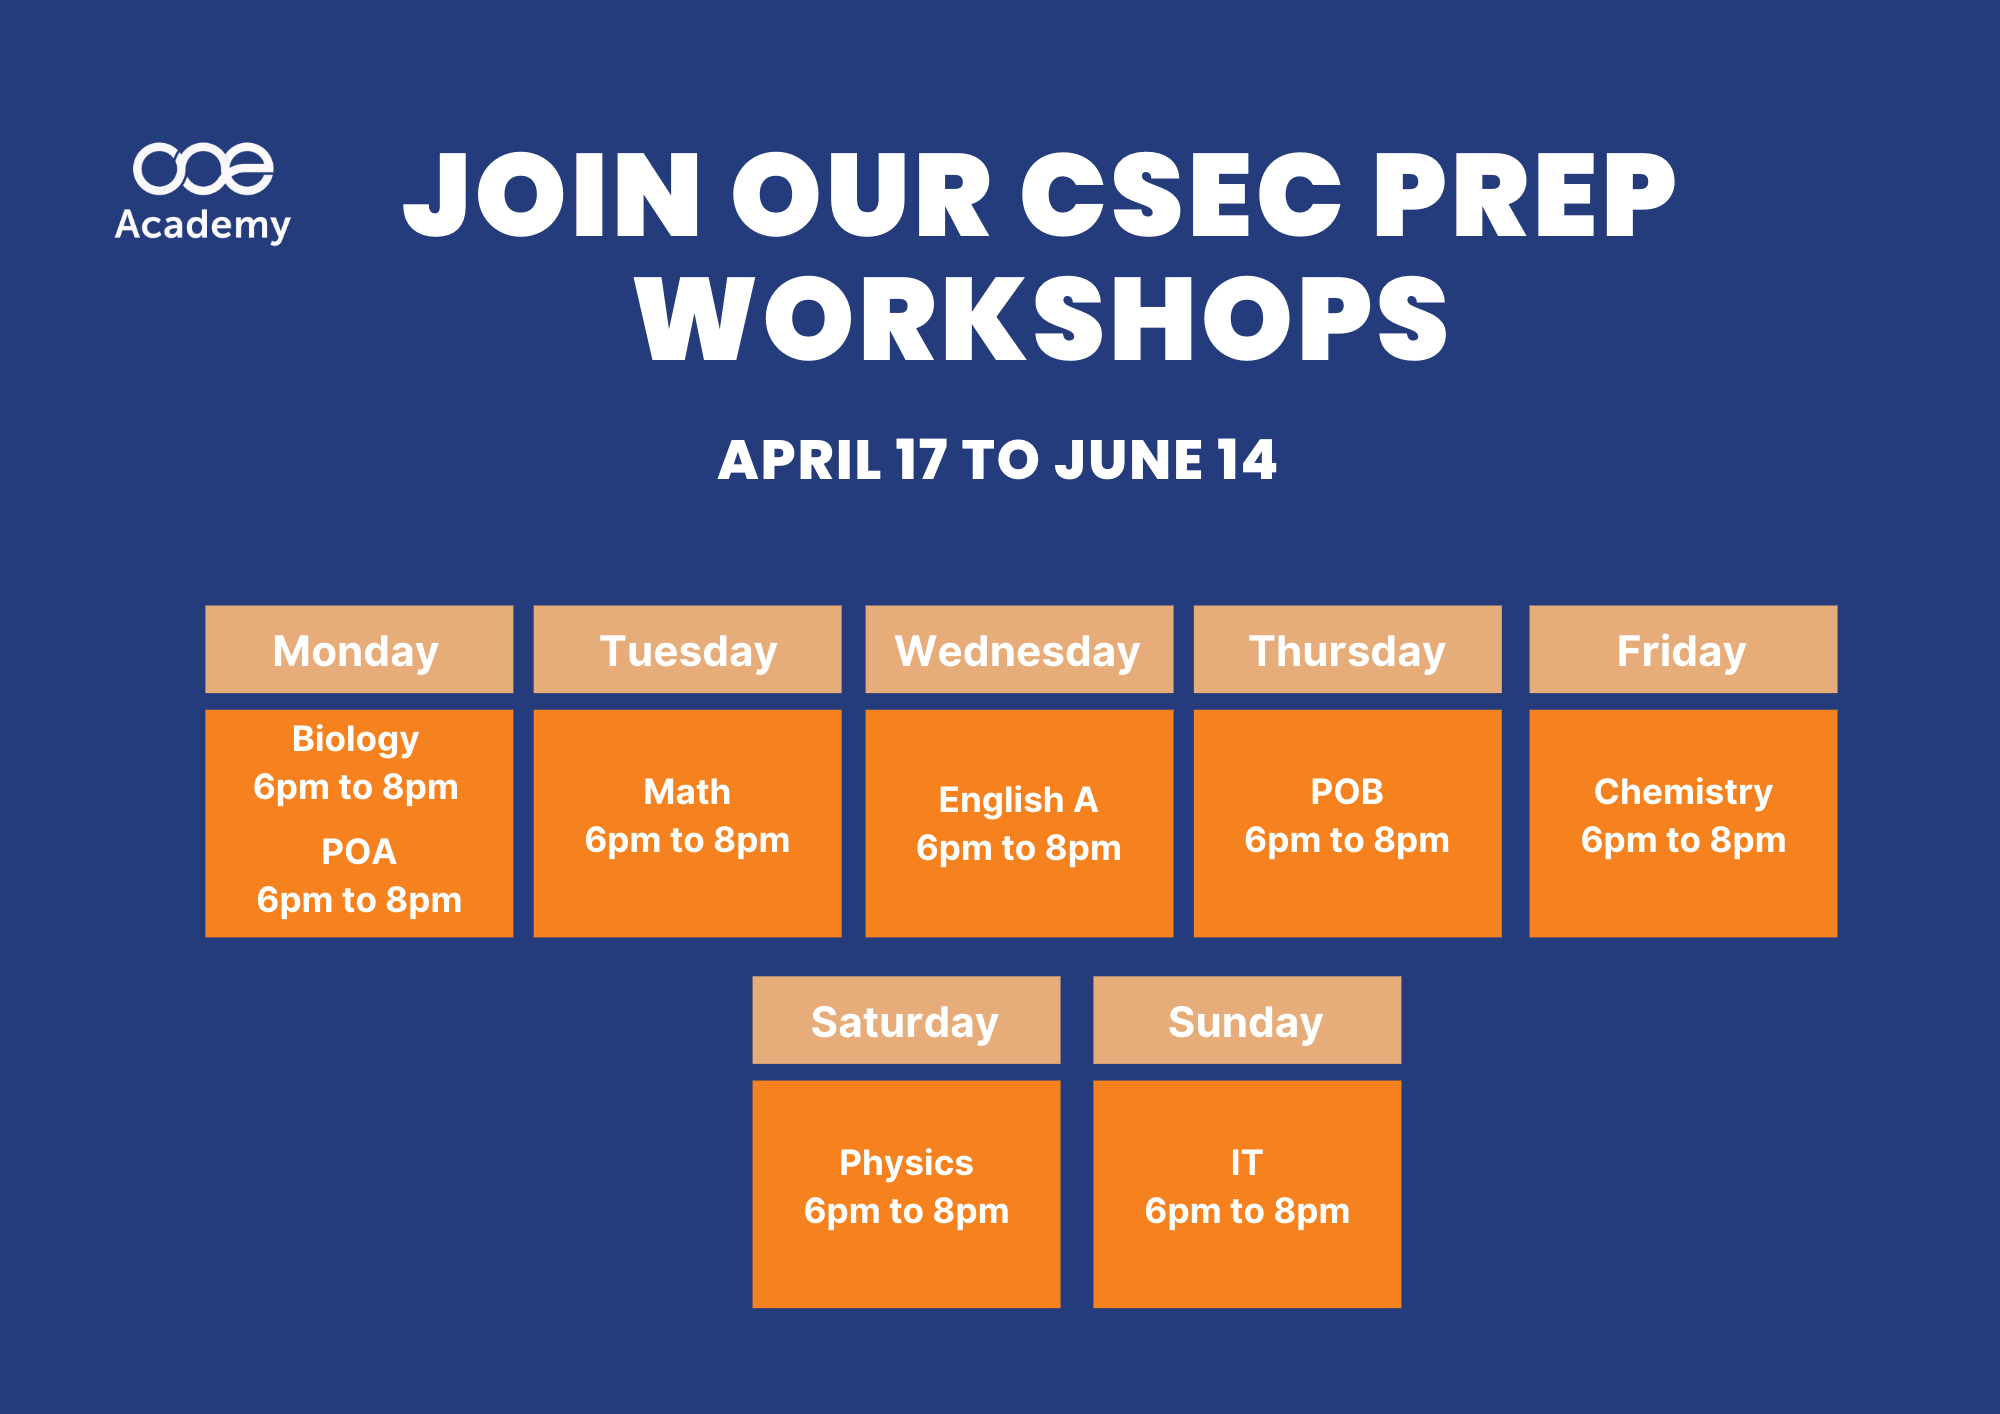 CSEC Workshop Schedule For One Academy